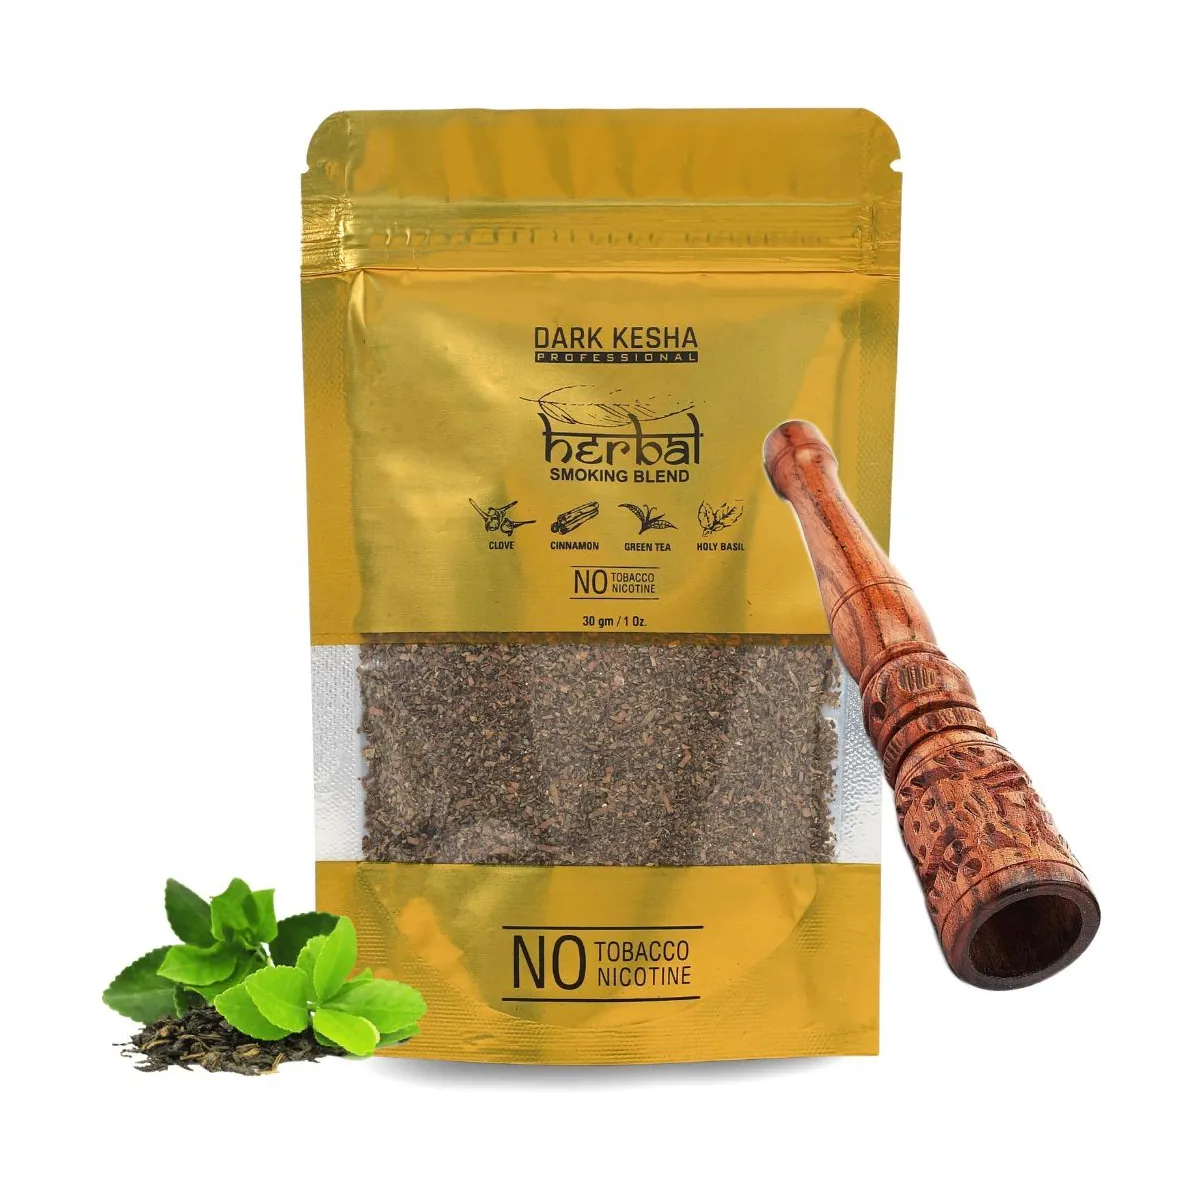 Dark Kesha Herbal Smoking Blend + Chillum Pipe 30gm + 1pcs 1Pack